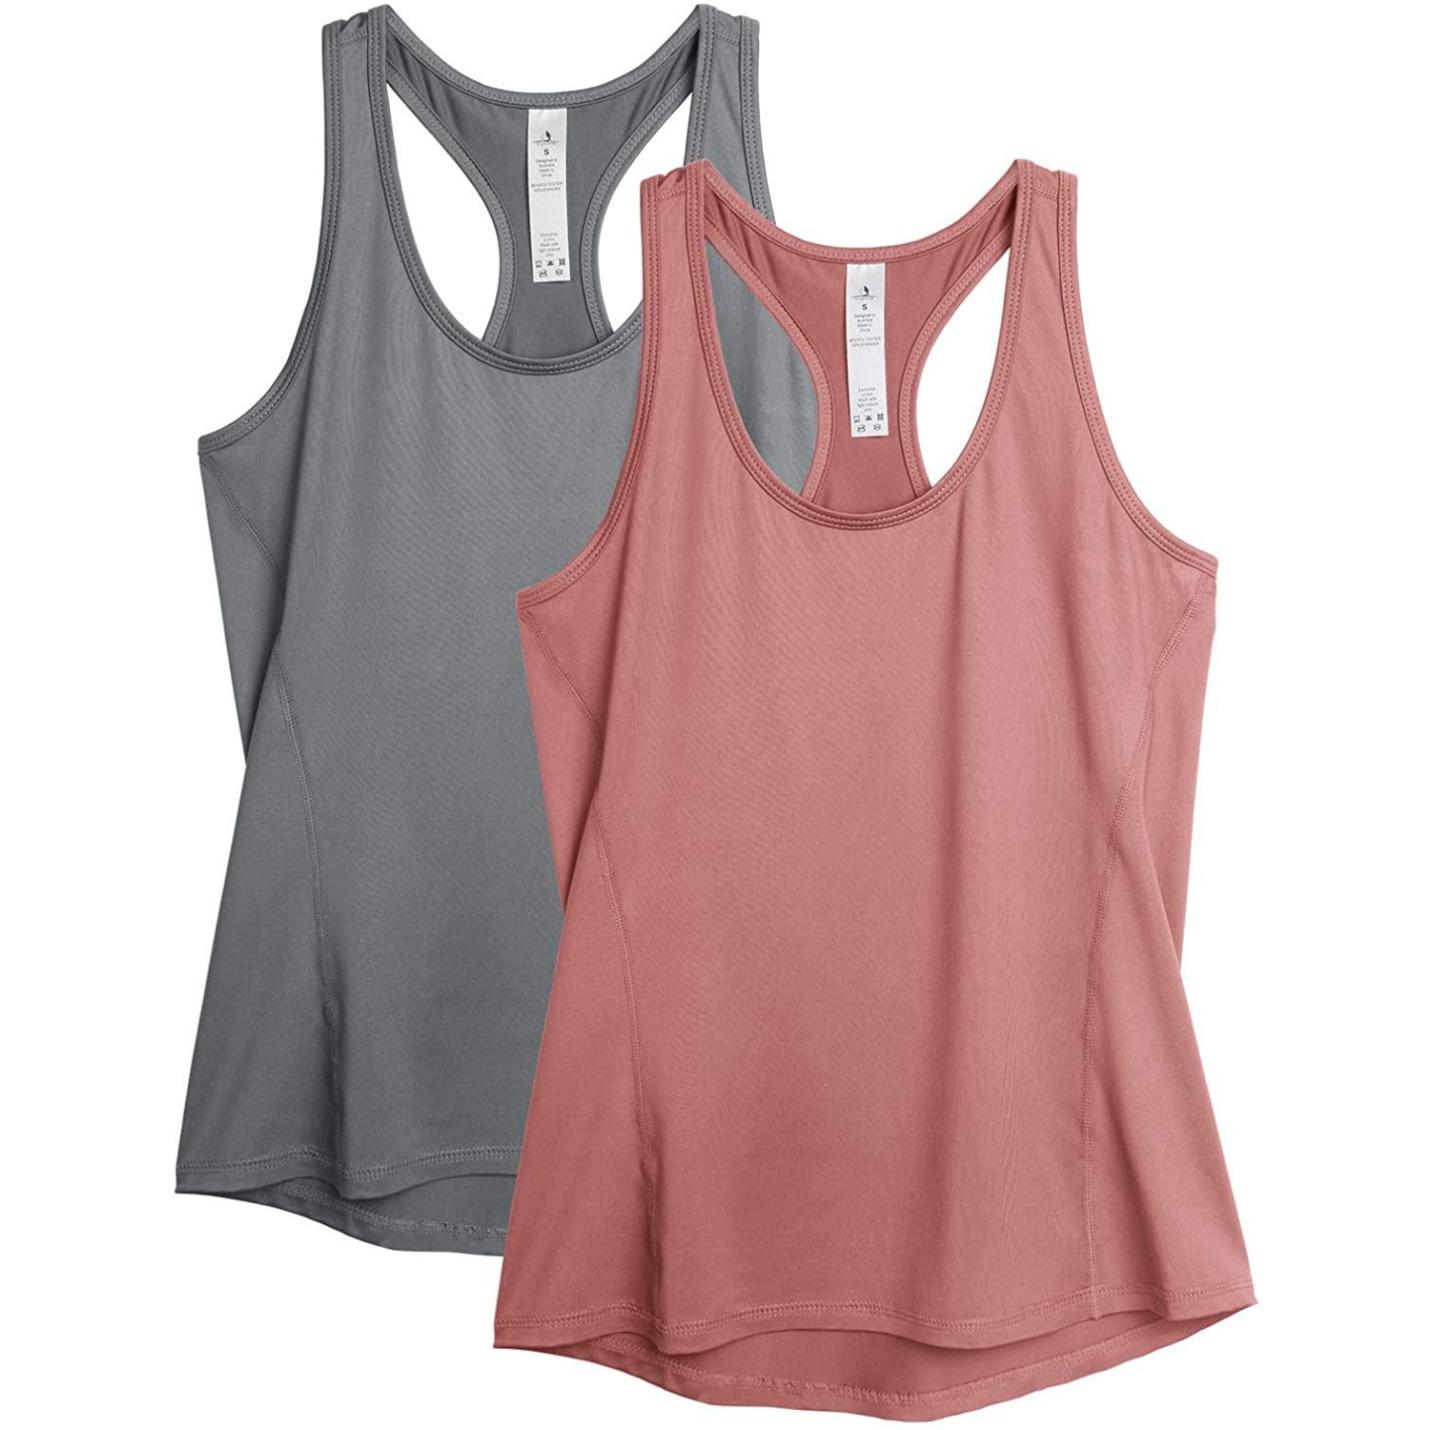 Dames 2-pack sport tank top racerback yoga bovenstuk fitness gym shirts L  grijsrokerig roze.